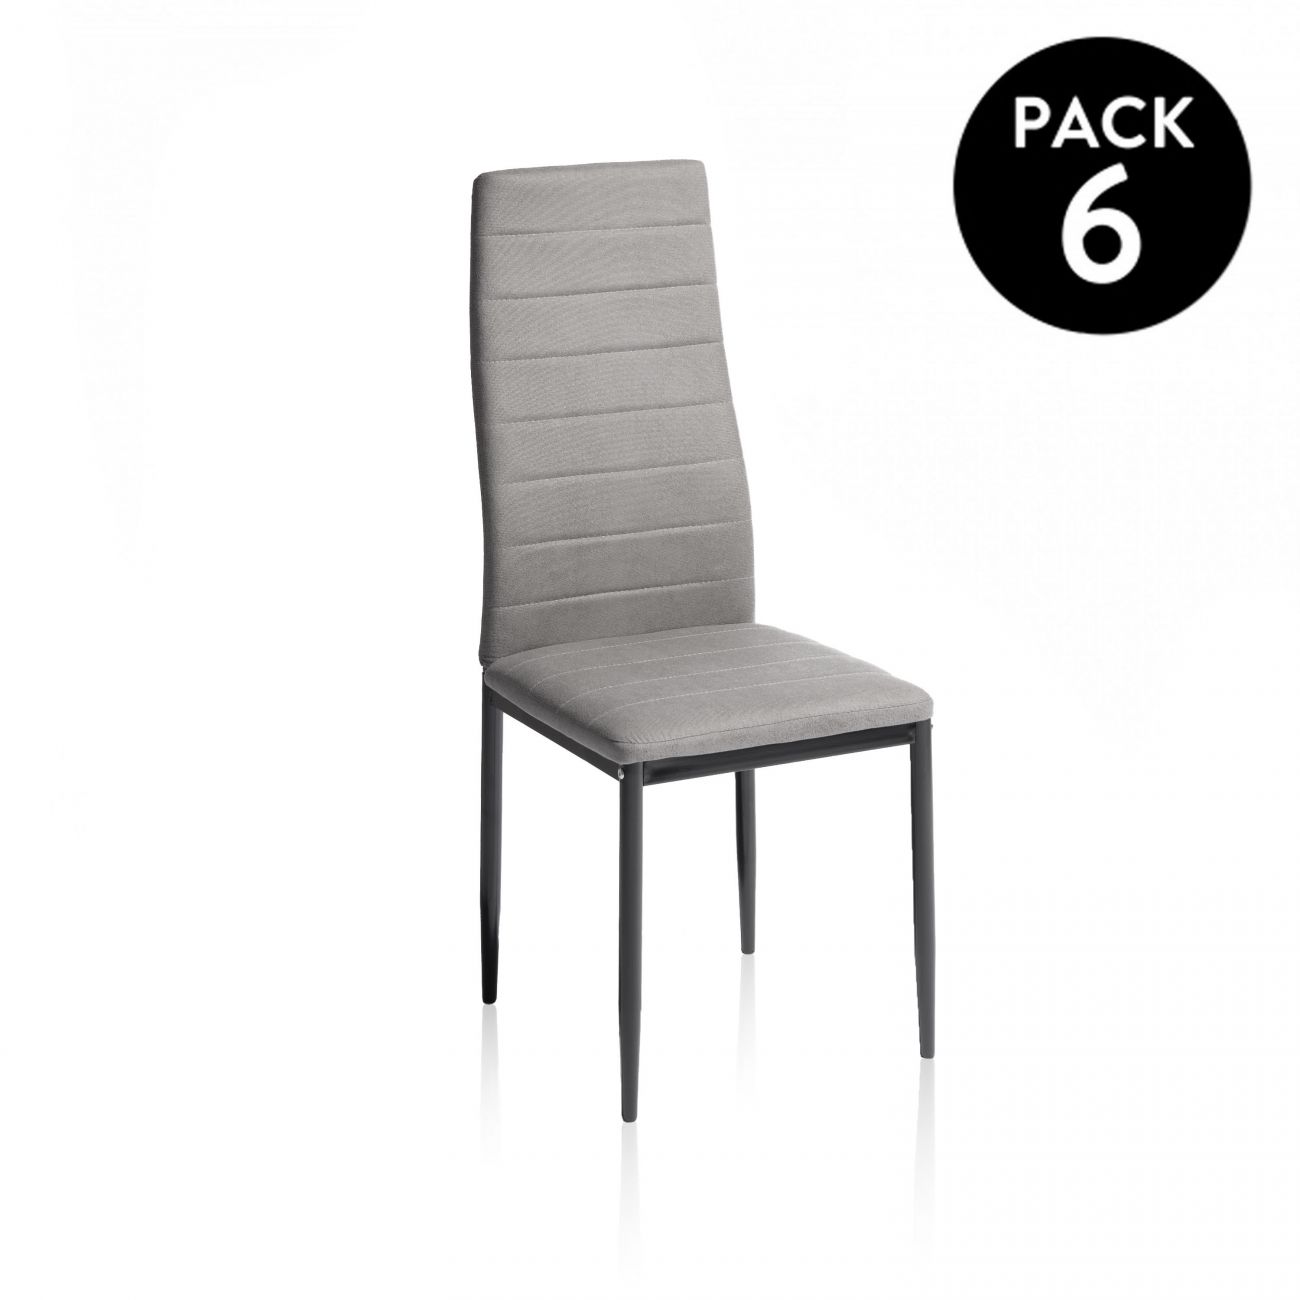 Pack 6 sillas Yuri Gris paras blancas - Conforama